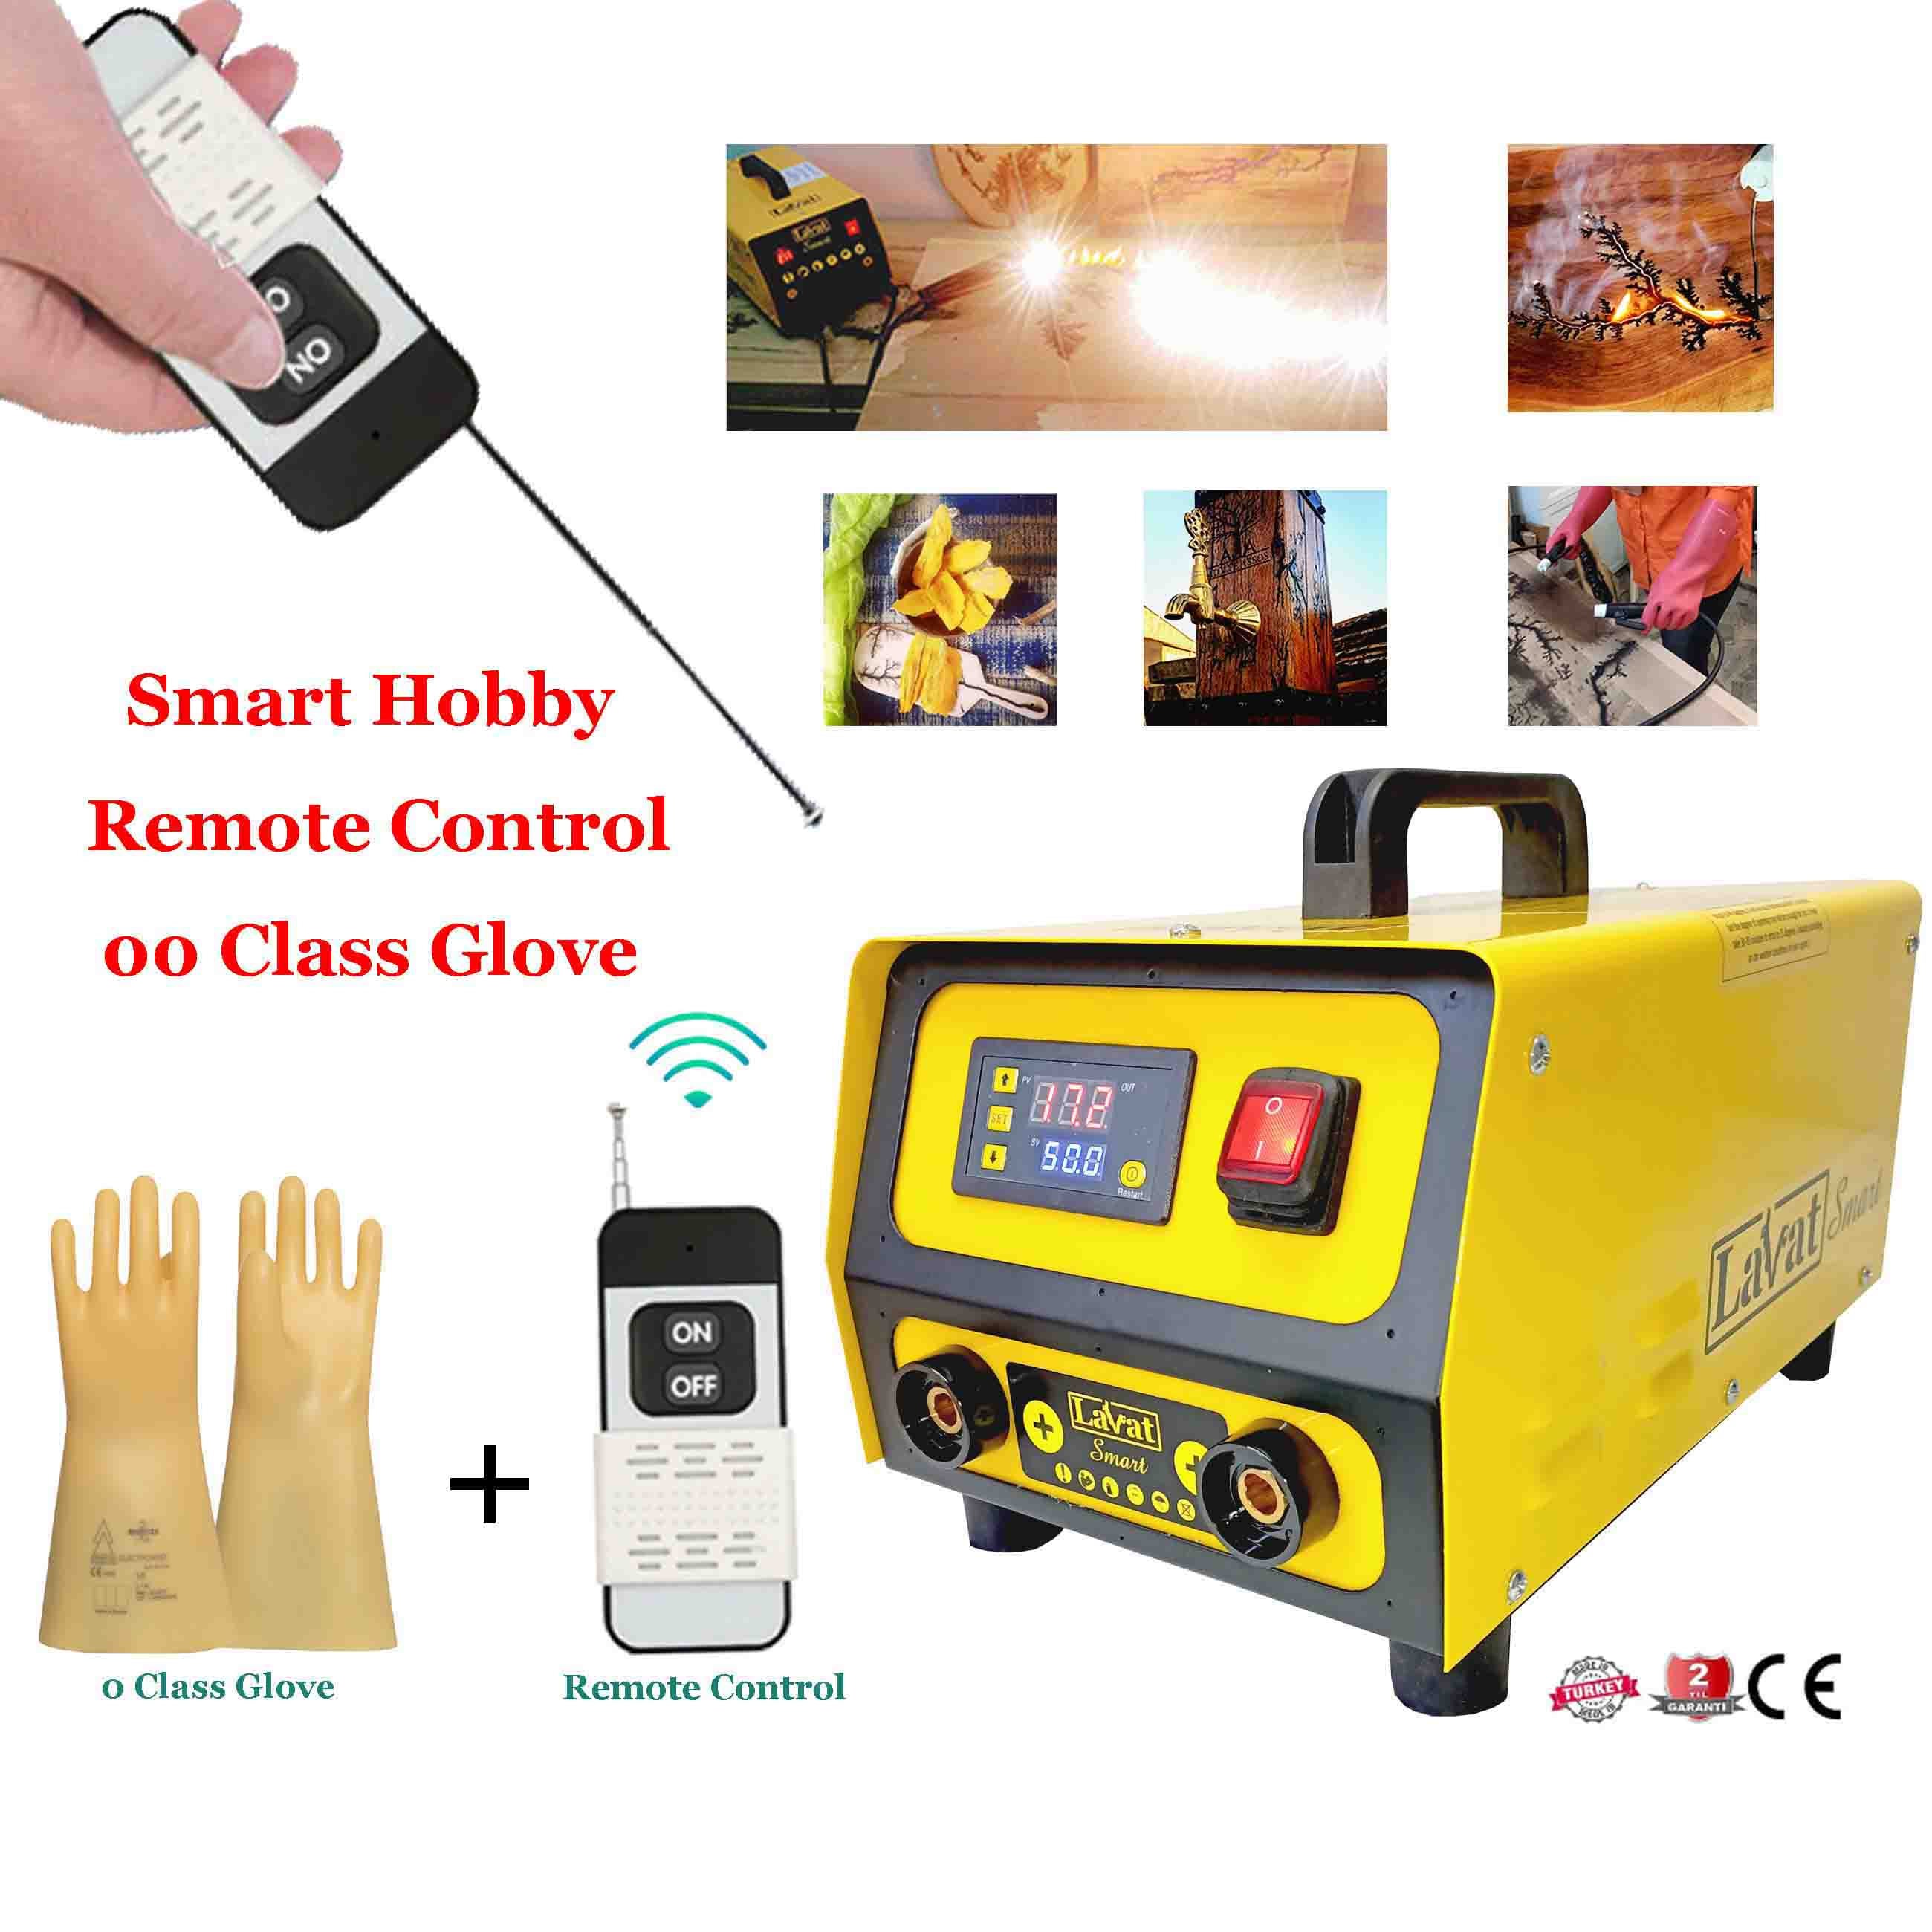 Lichtenberg Wood Burning Machine, Smart Hobby 00 Class Glove